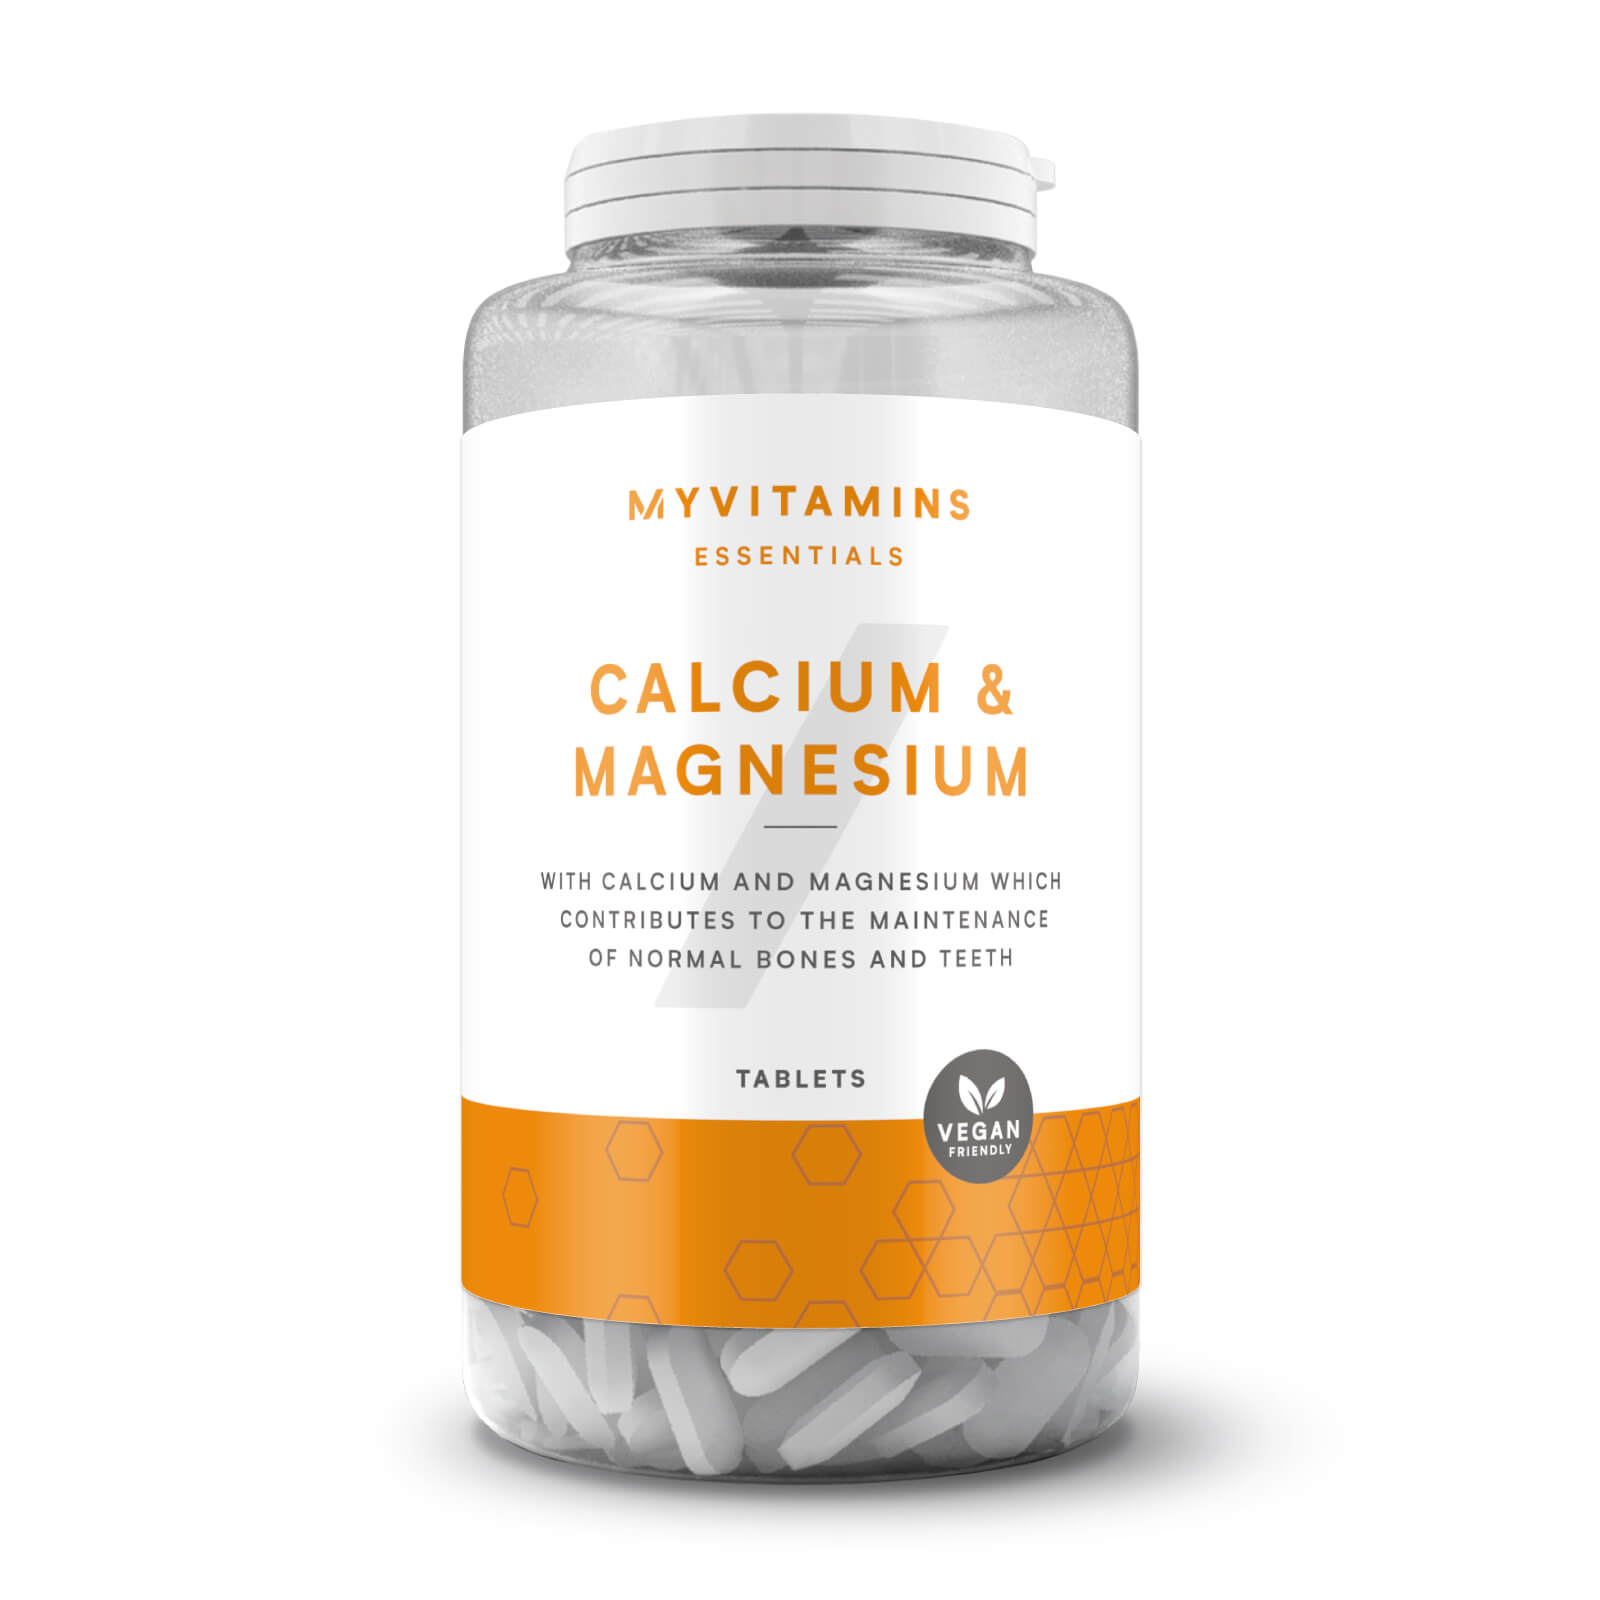 Myvitamins Calcium & Magnesium Tablets - 90Tablets